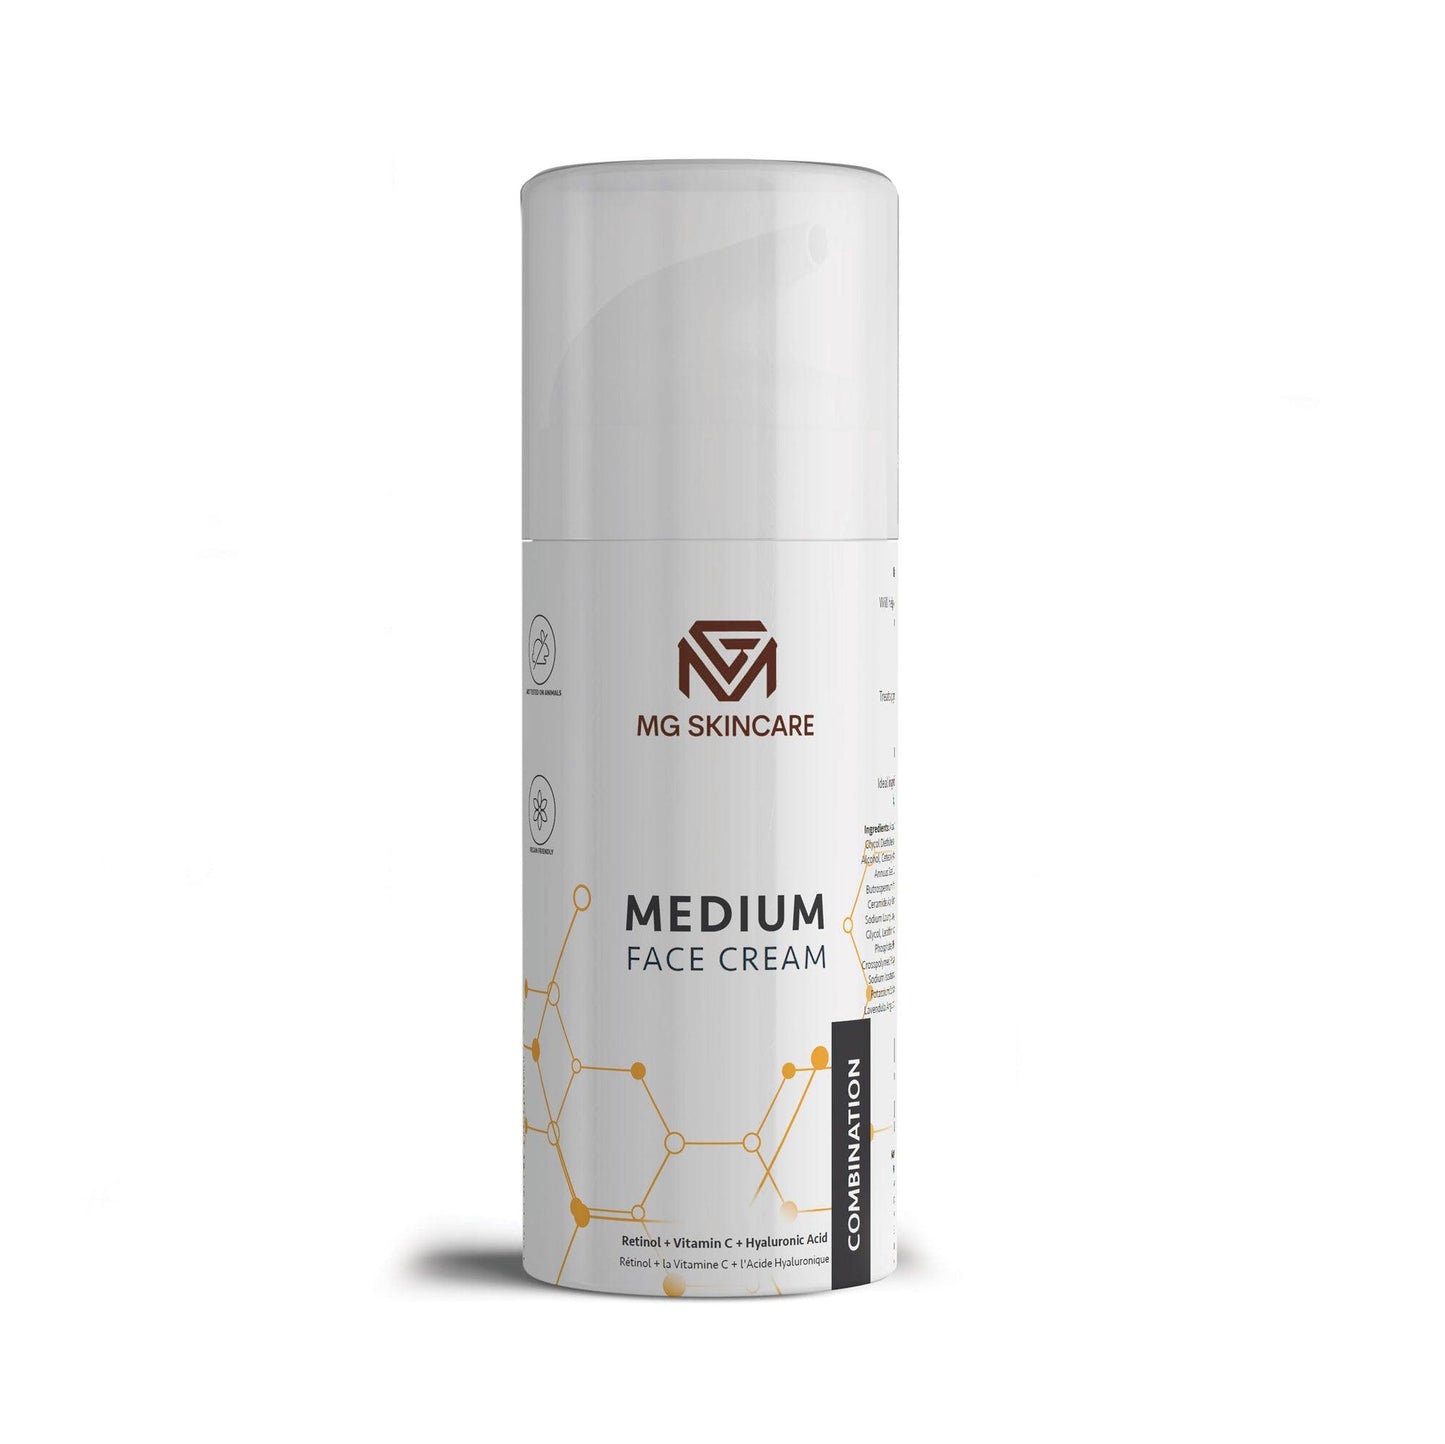 Medium Face Cream with Retinol - Vita C & Hyaluronic Acid - MG Skincare